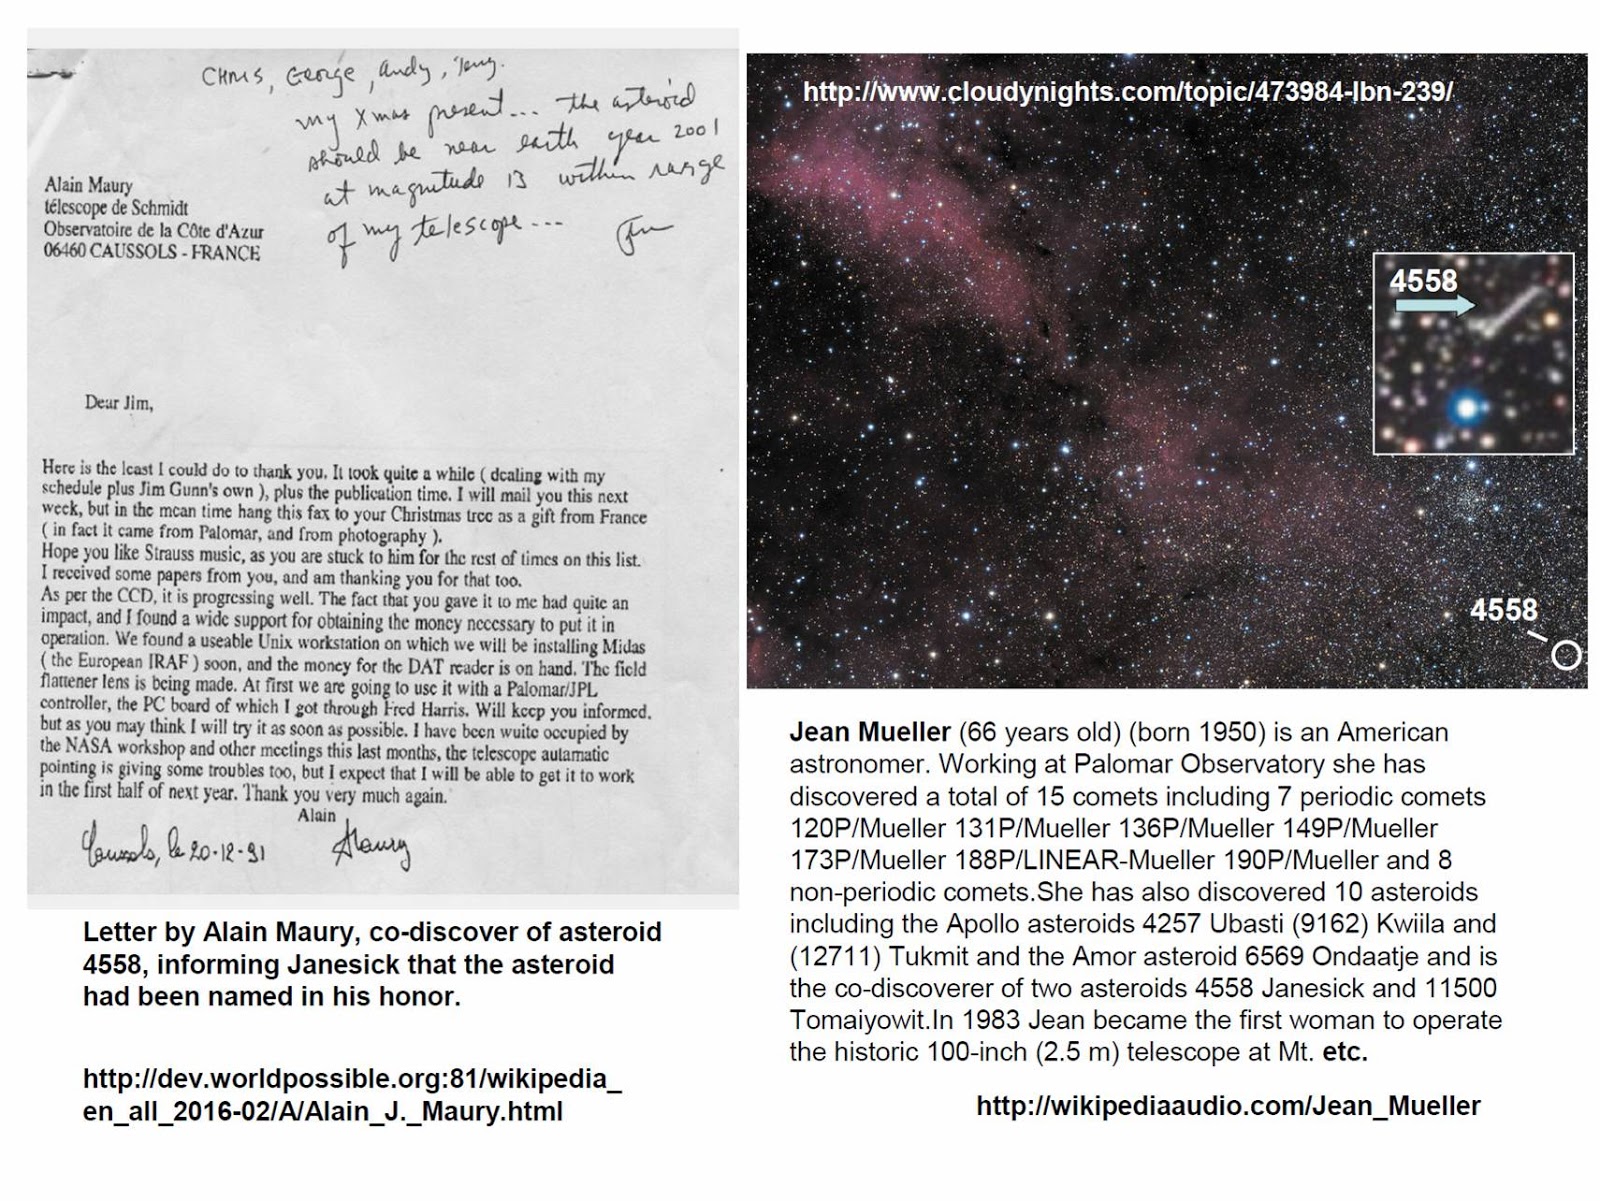 Jean Mueler of Palomar Observatlory names asteroid in honor of James Janesick